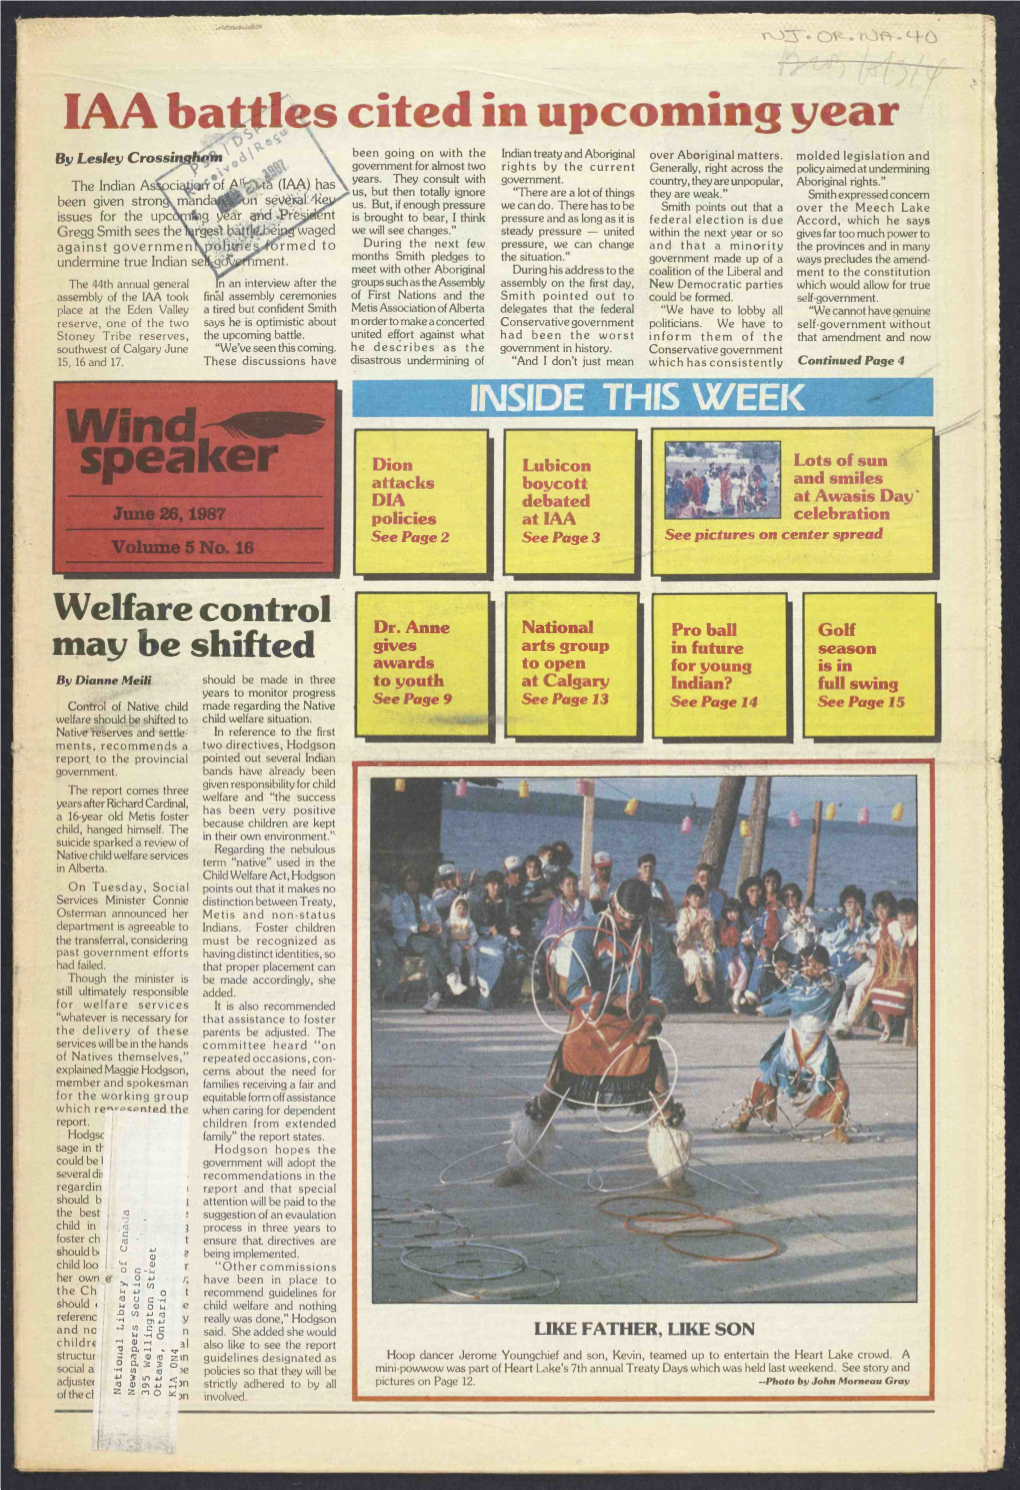 WINDSPEAKER, June 26, 1987, PAGE 7 SPEAKING OUT